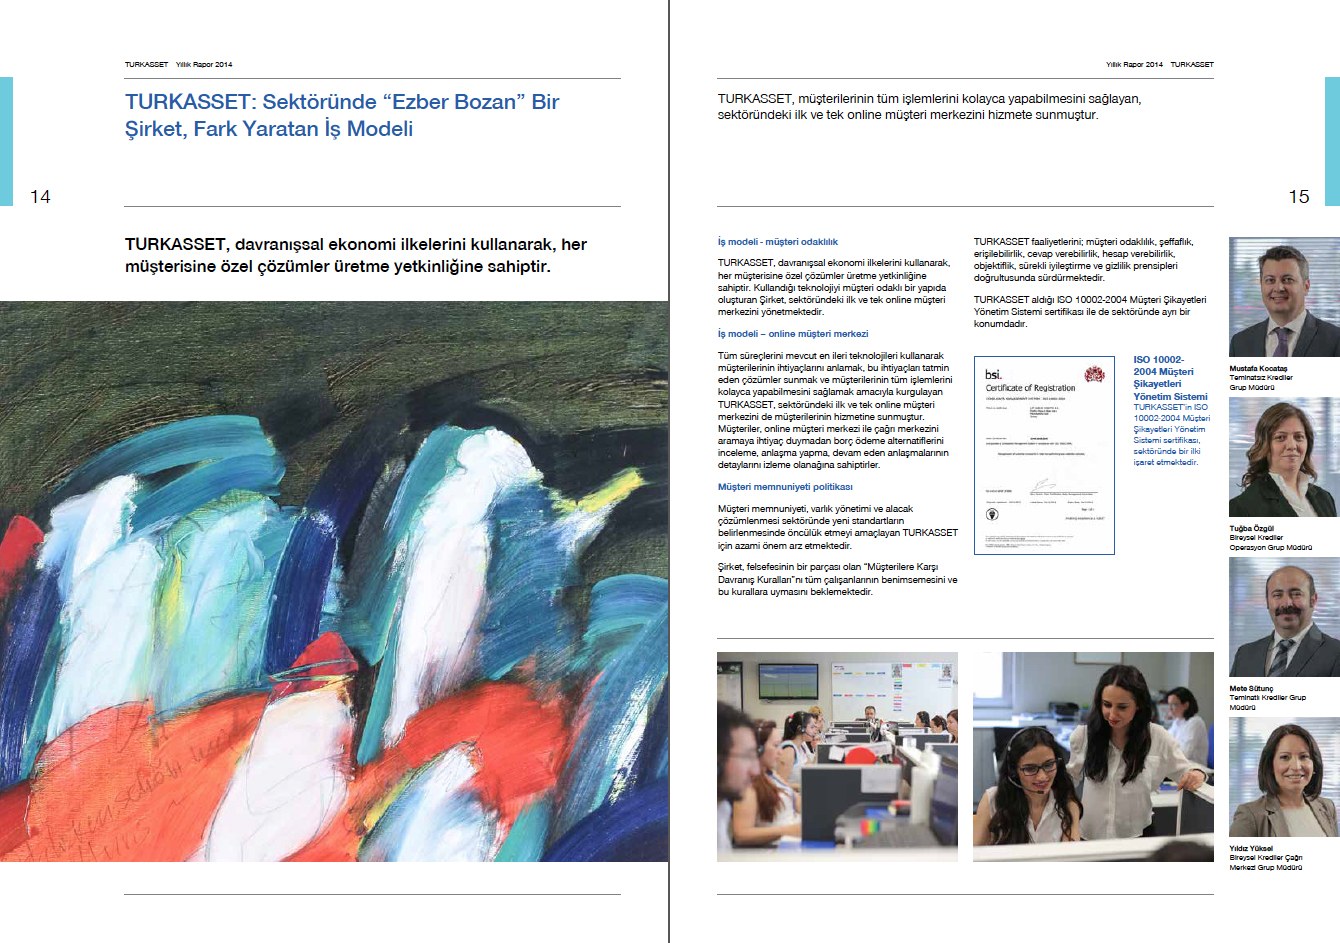 TURKASSET / 2014 Faaliyet Raporu / 2014 Annual Report